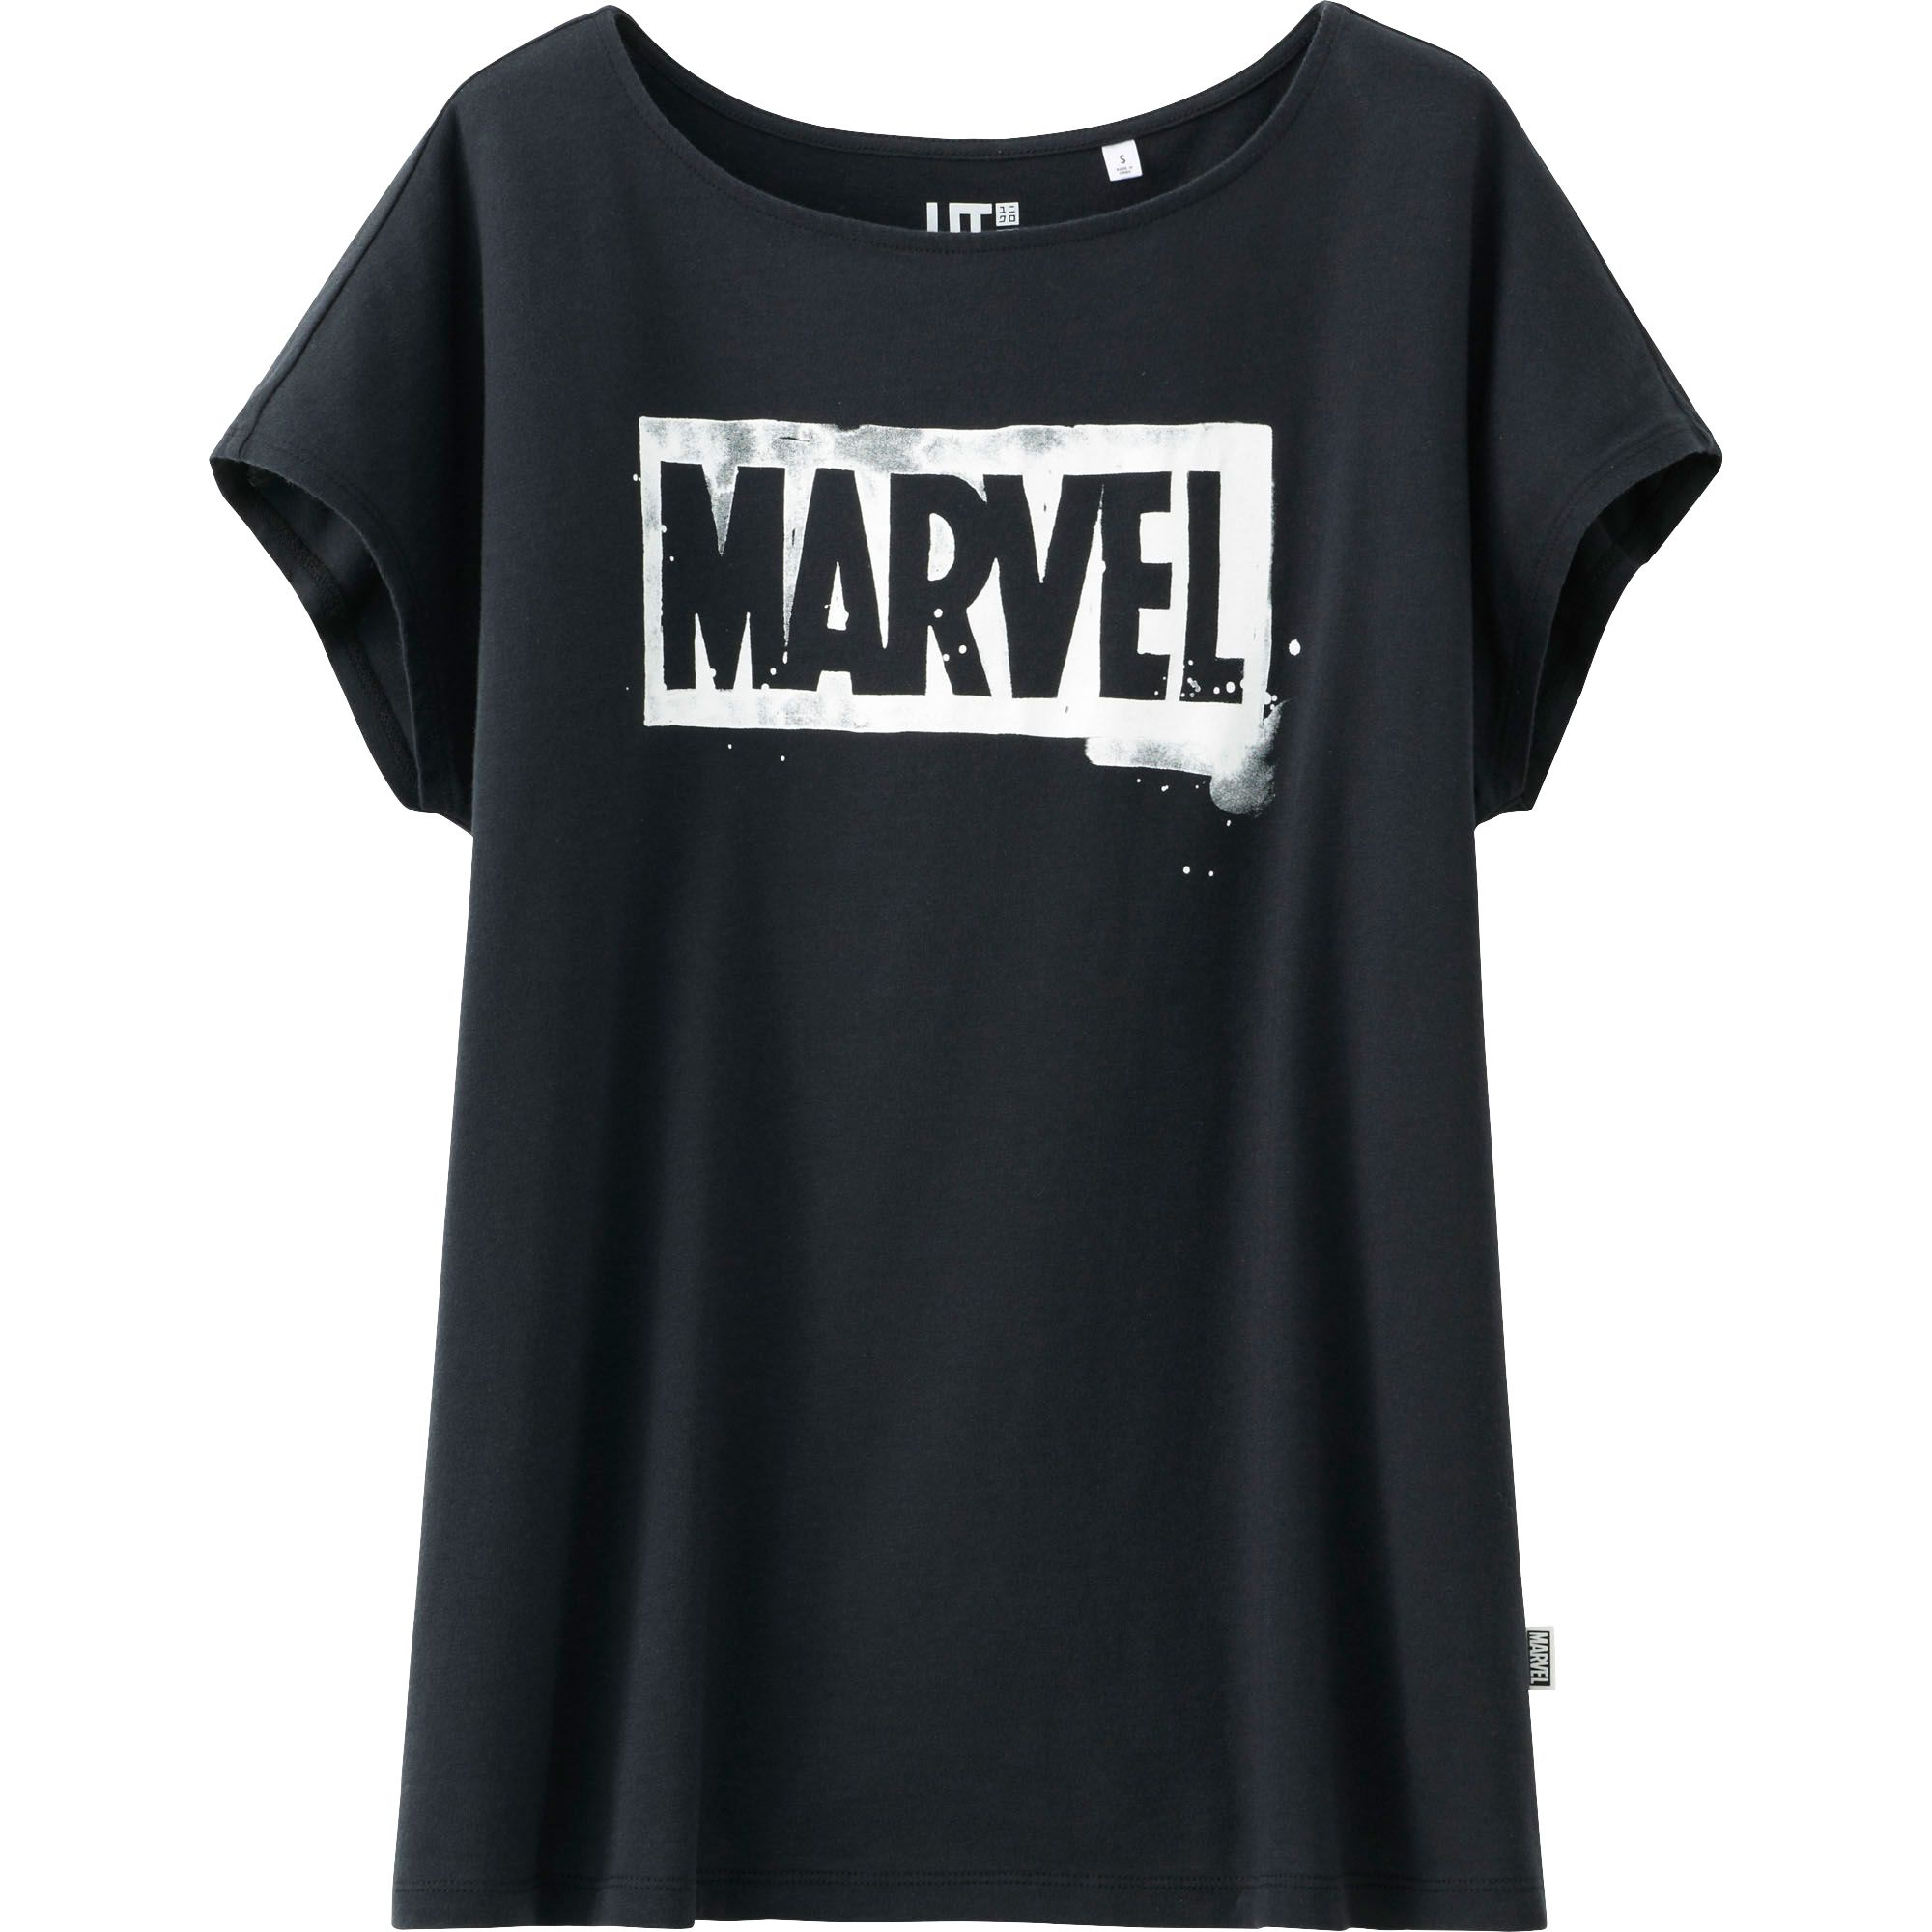 Uniqlo Women Marvel Avengers Short Sleeve TShirt in Black